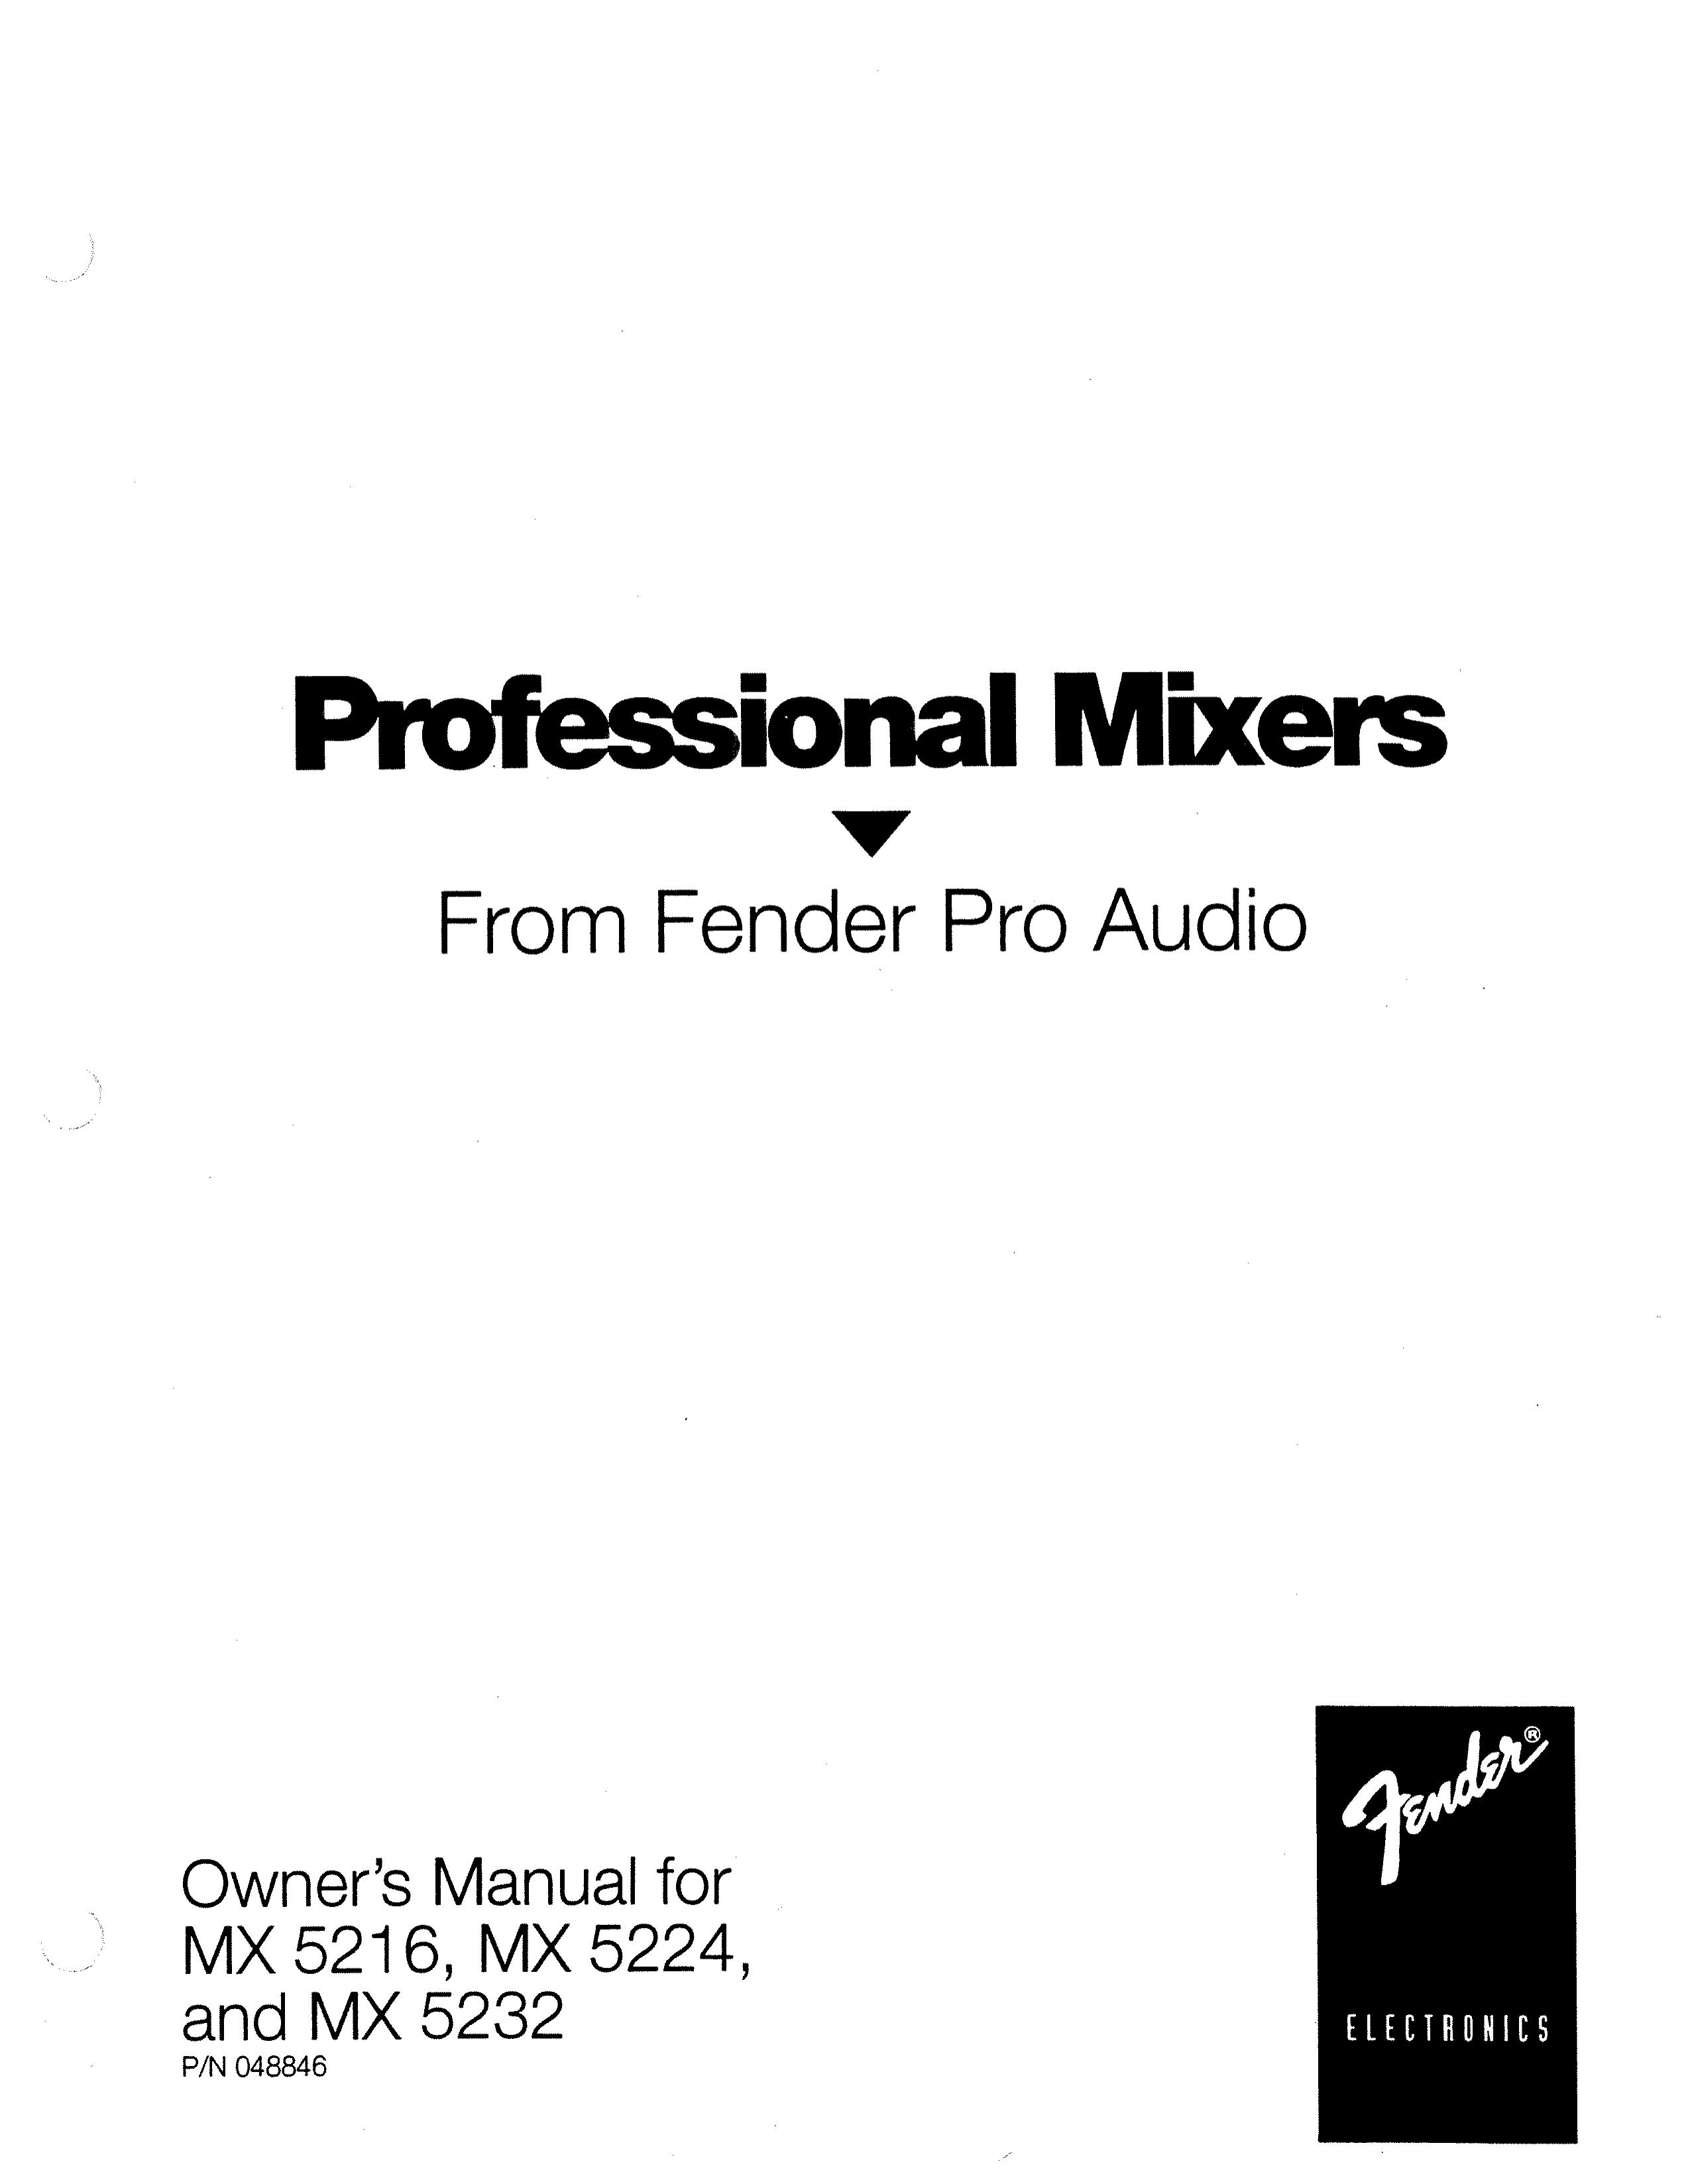 Fender MX 5216 DJ Equipment User Manual